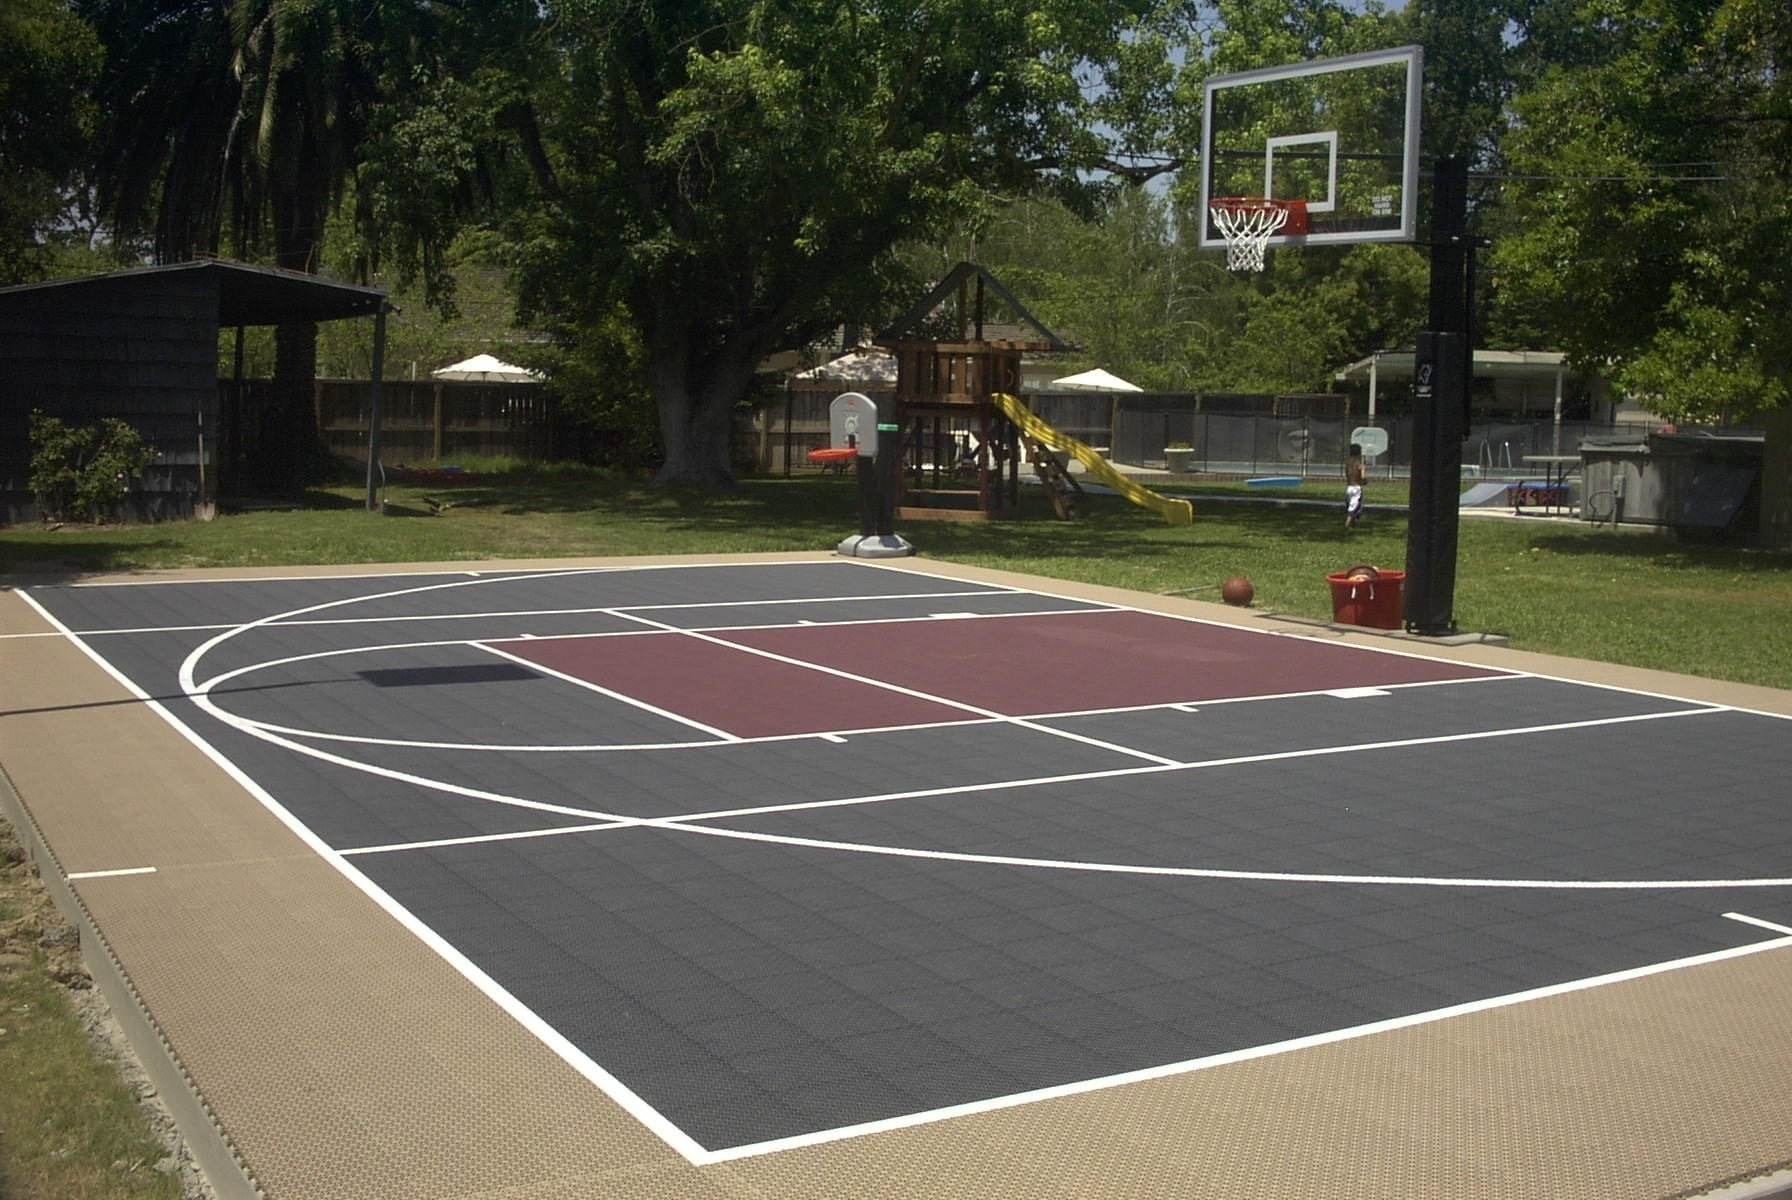 19.SIMPHOME.COM backyard basketball court 1000 43 ideas about backyard basketball